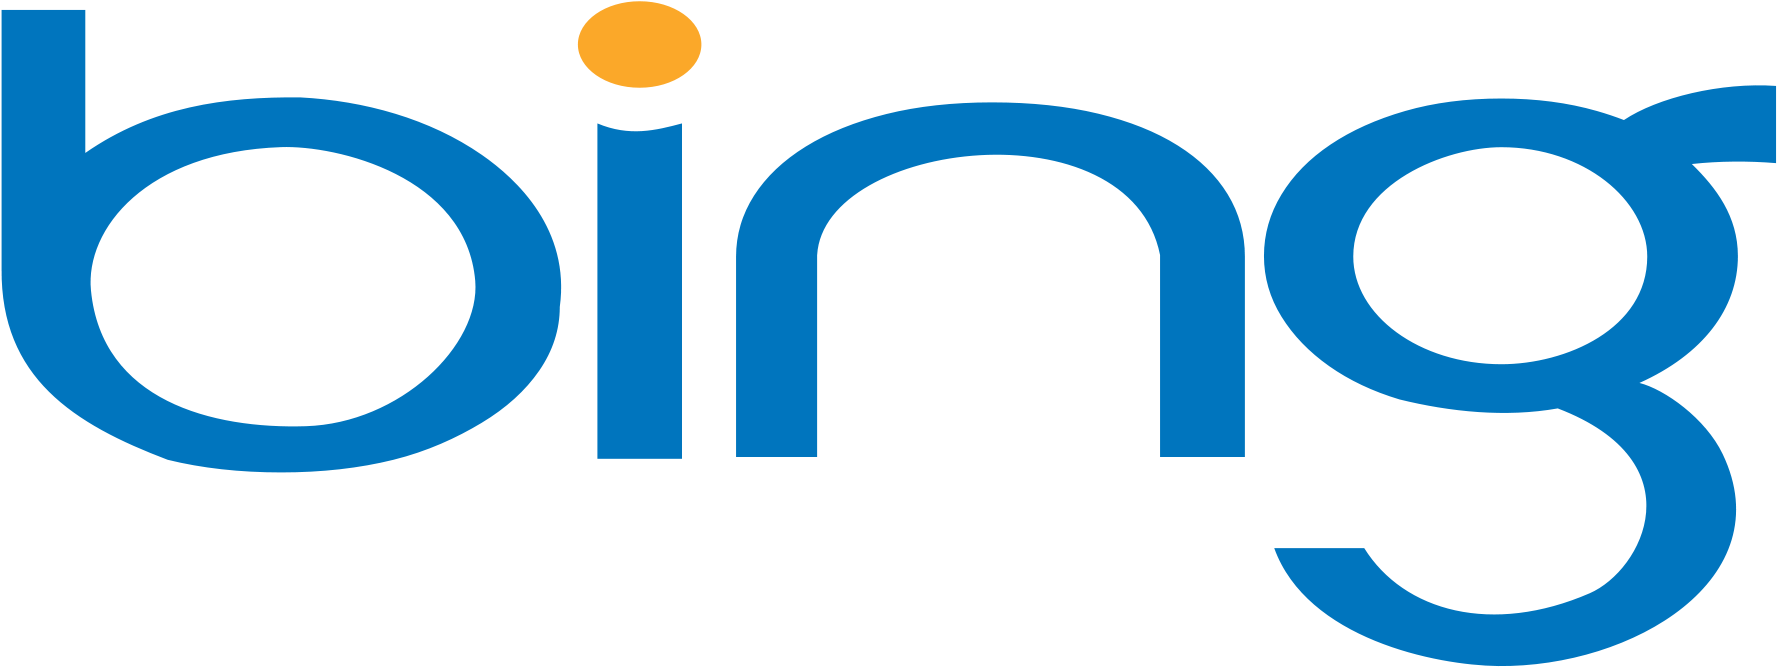 The Original Bing Logo - Logo Bing (2272x1704)